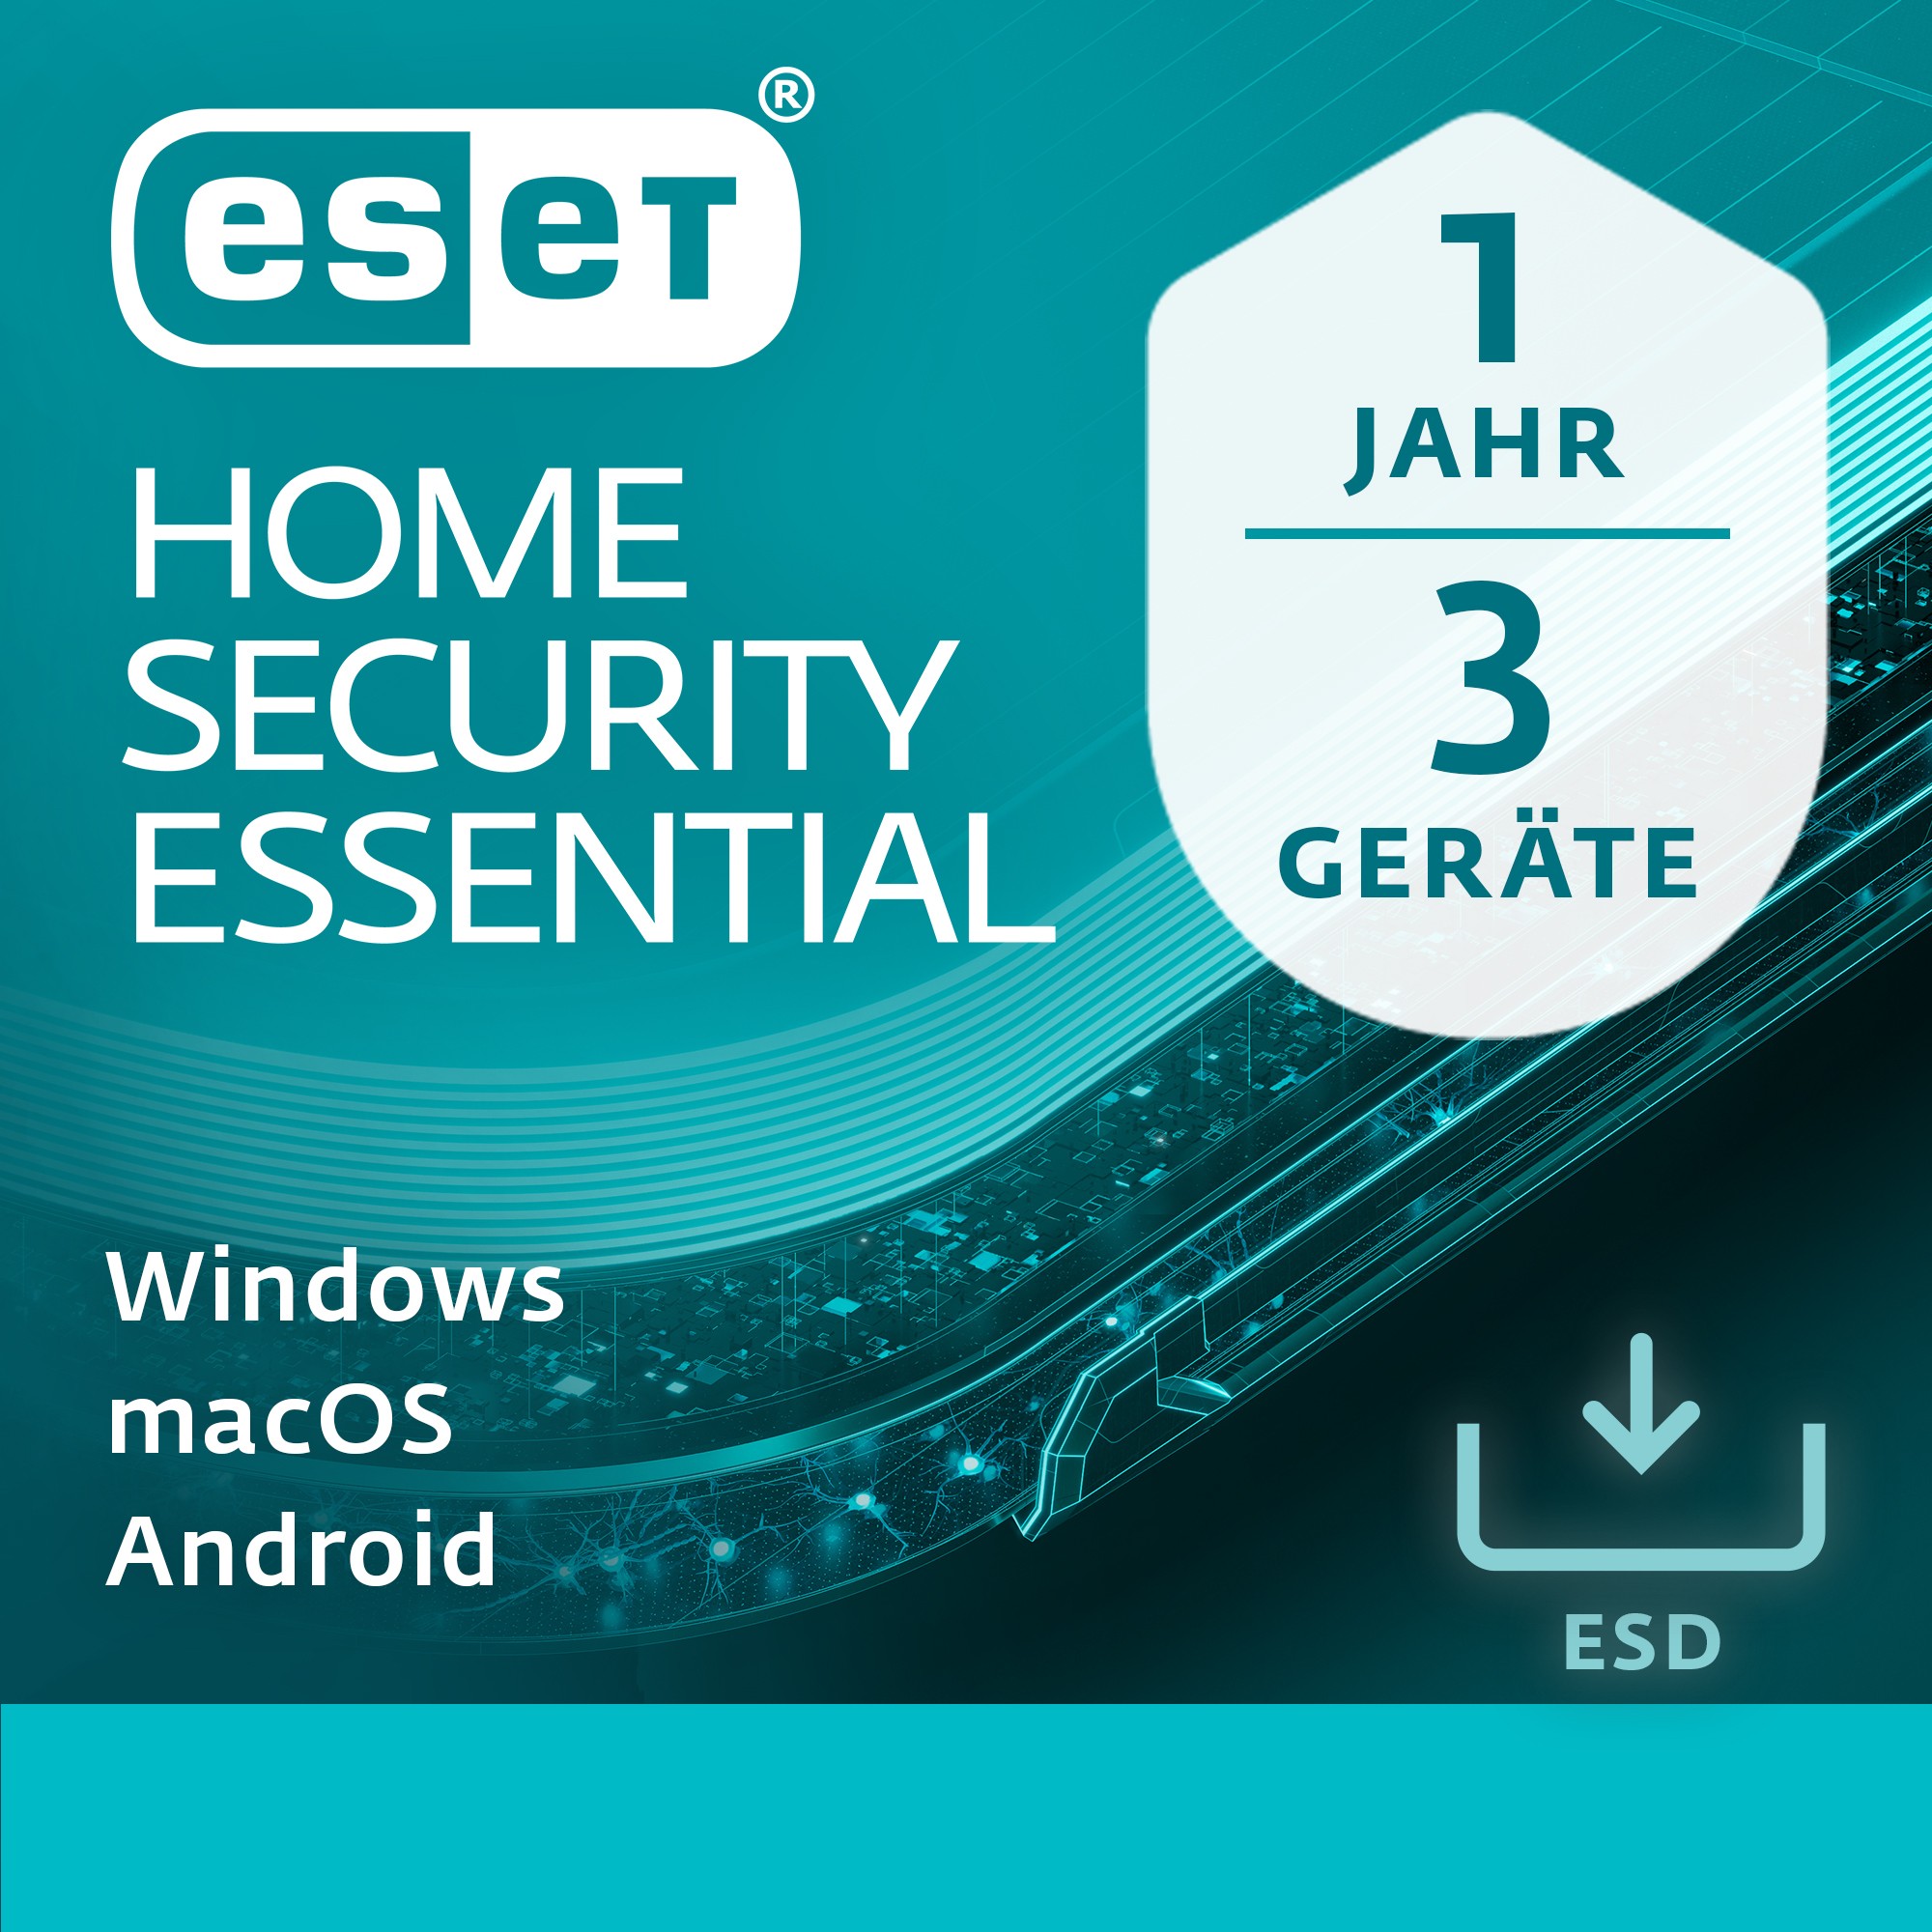 ESET EHSE-N1A3-VAKT-E, ESD-Lizenzen, ESET Home Security  (BILD1)